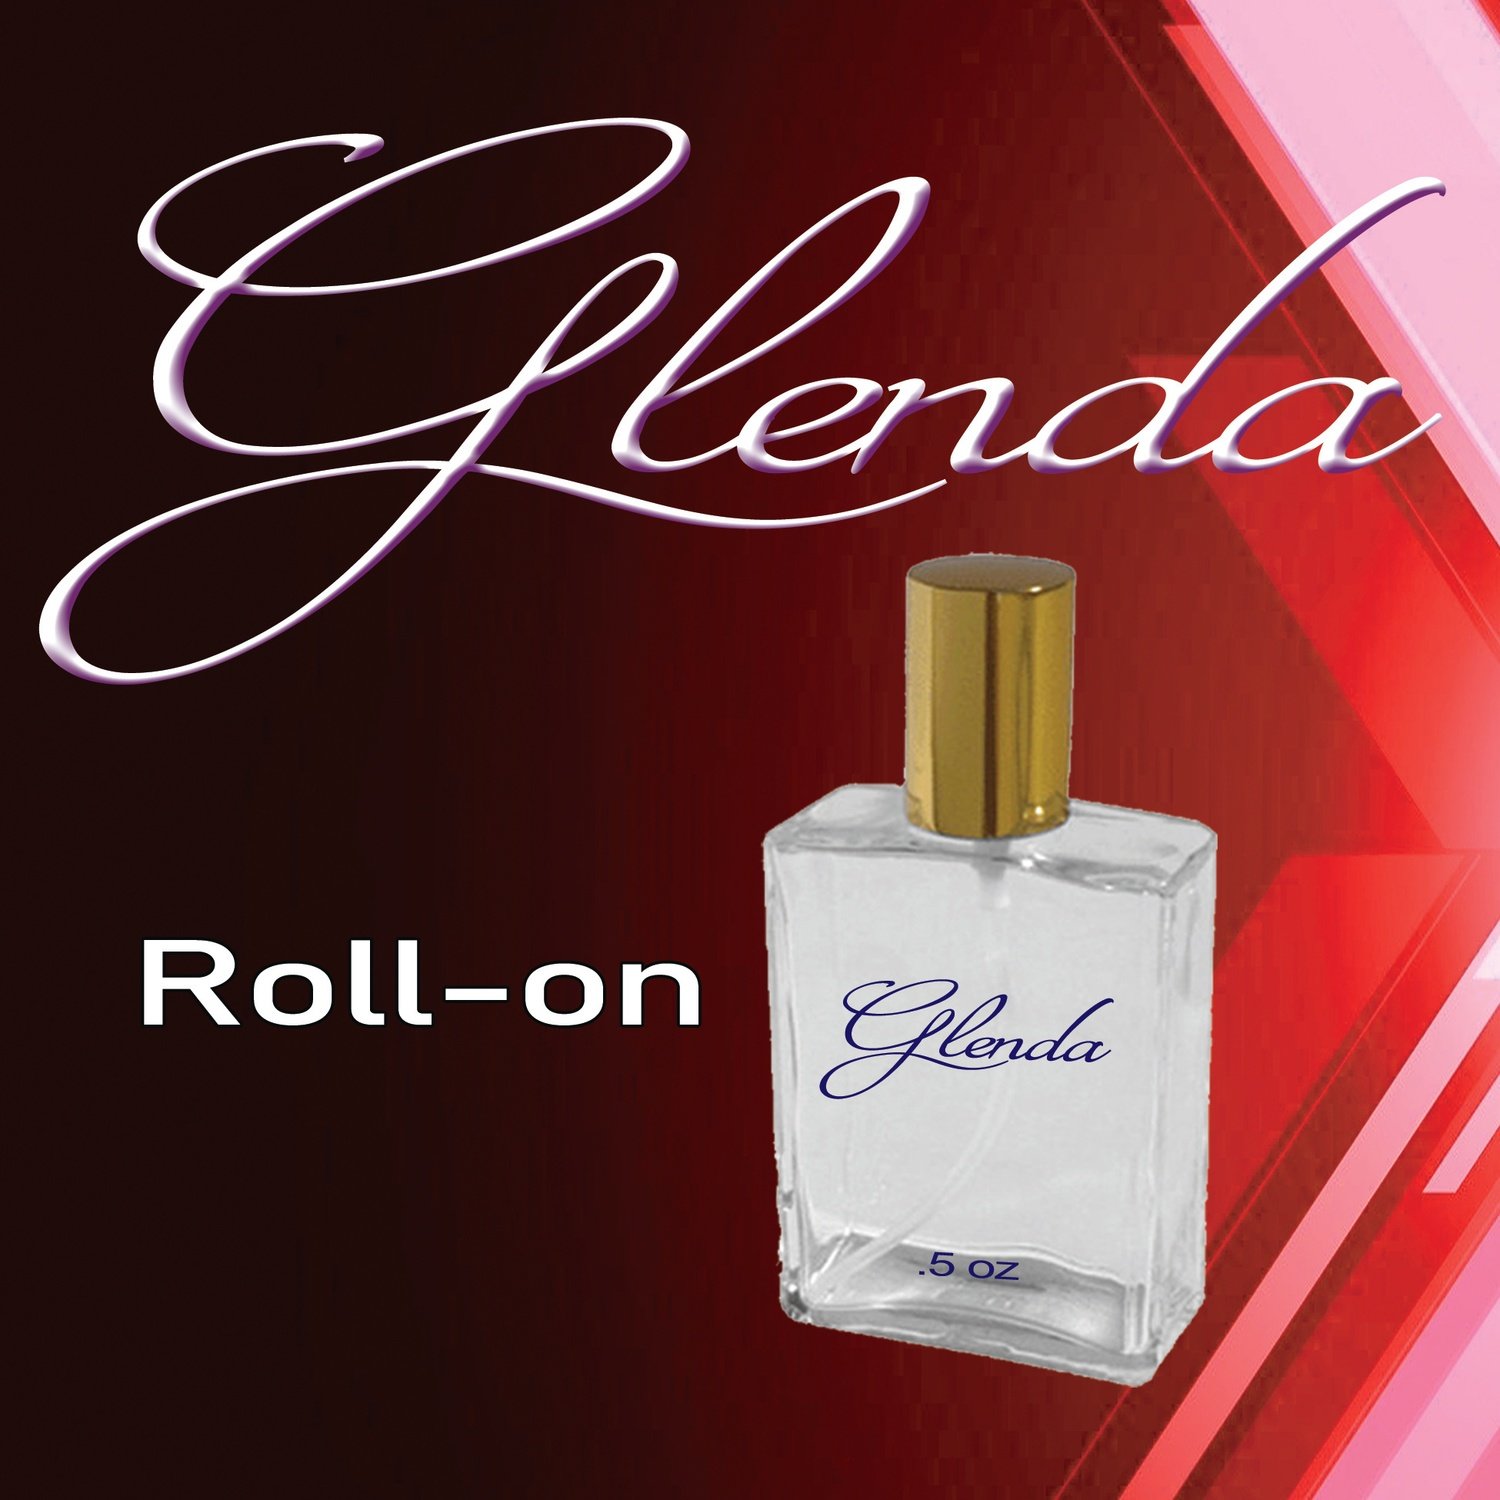 Glenda  (Roll-On)